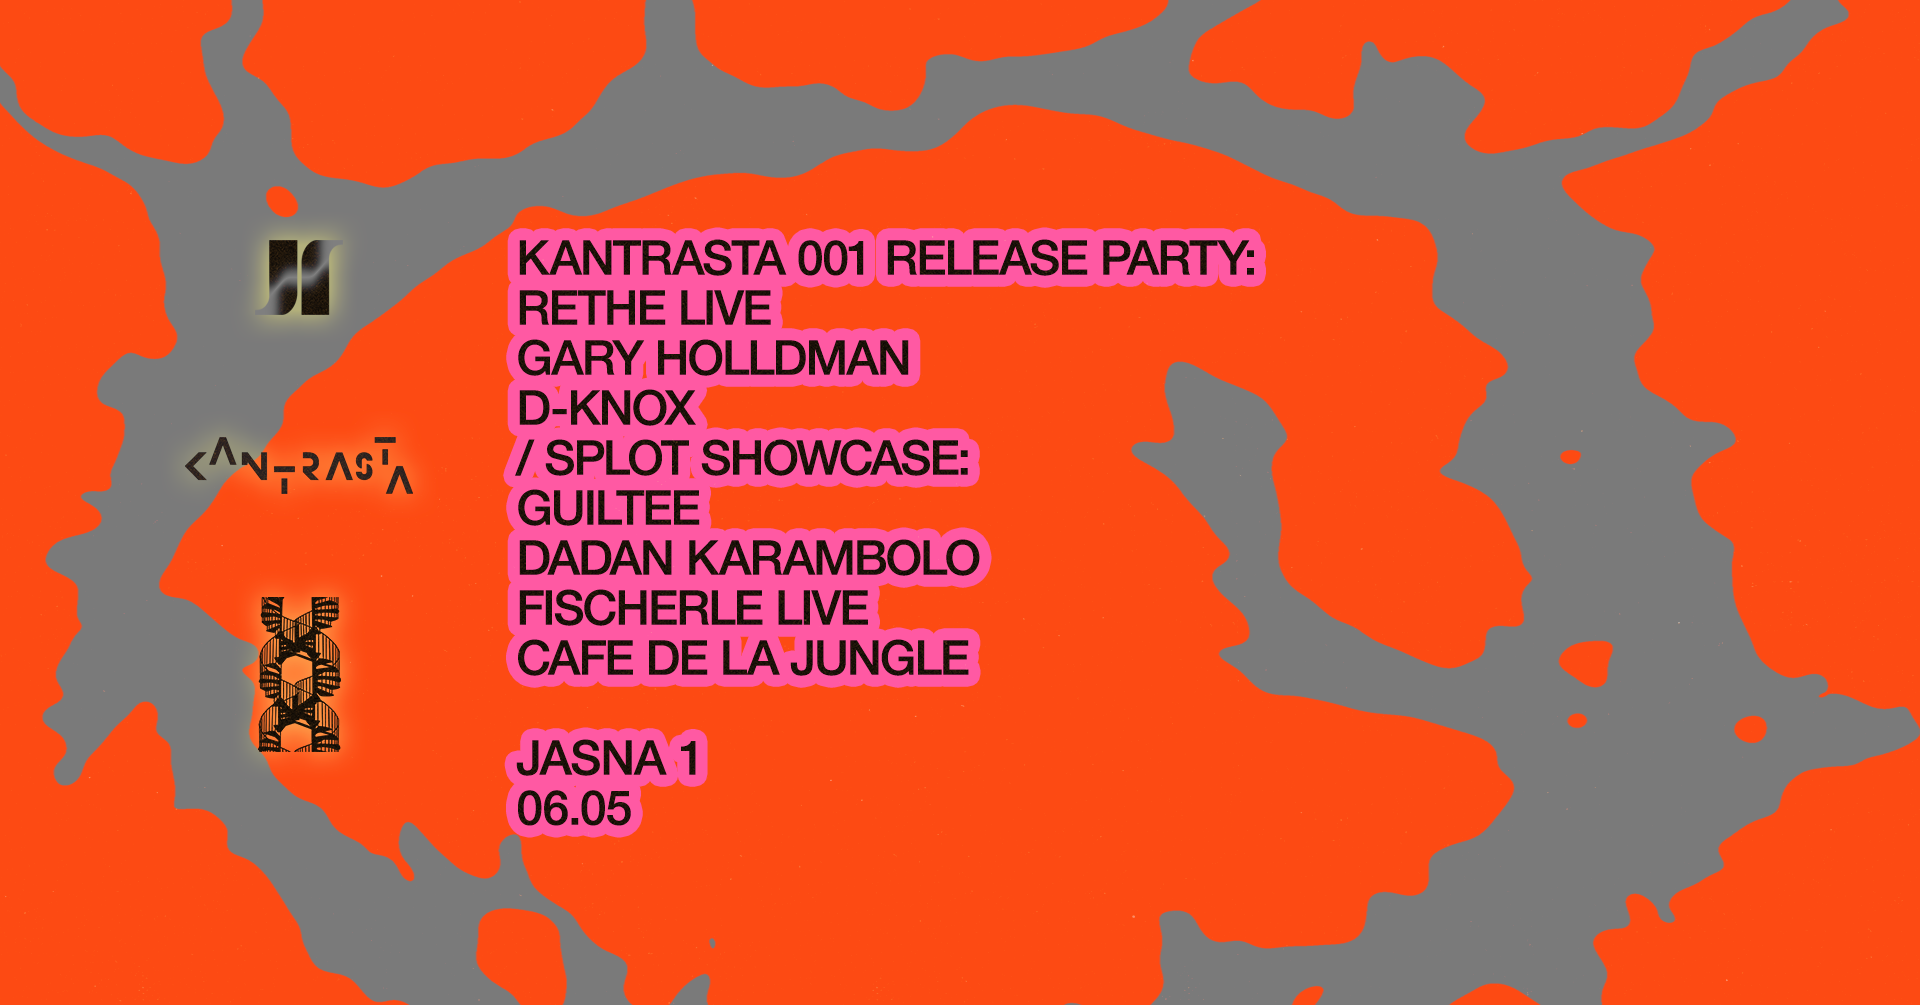 J1 - Kantrasta 001 Release Party: Rethe LIVE, Gary Holldman, D-knox / SPLOT Showcase - フライヤー表